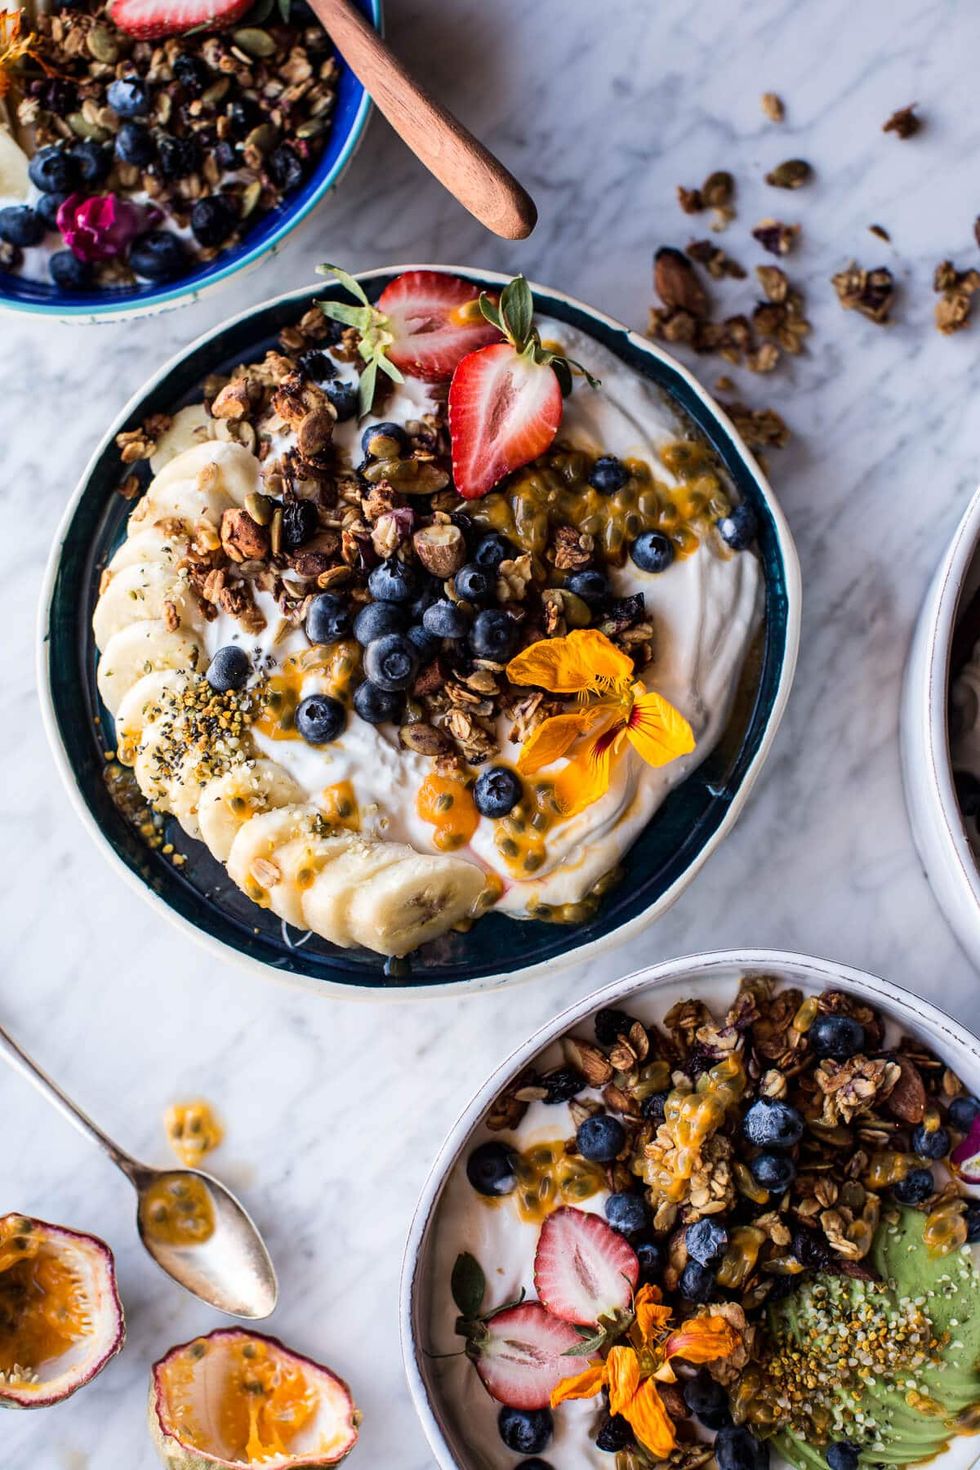 https://hips.hearstapps.com/hmg-prod/images/blueberry-muffin-granola-greek-yogurt-breakfast-bowl-1542140064.jpg?crop=1xw:1xh;center,top&resize=980:*